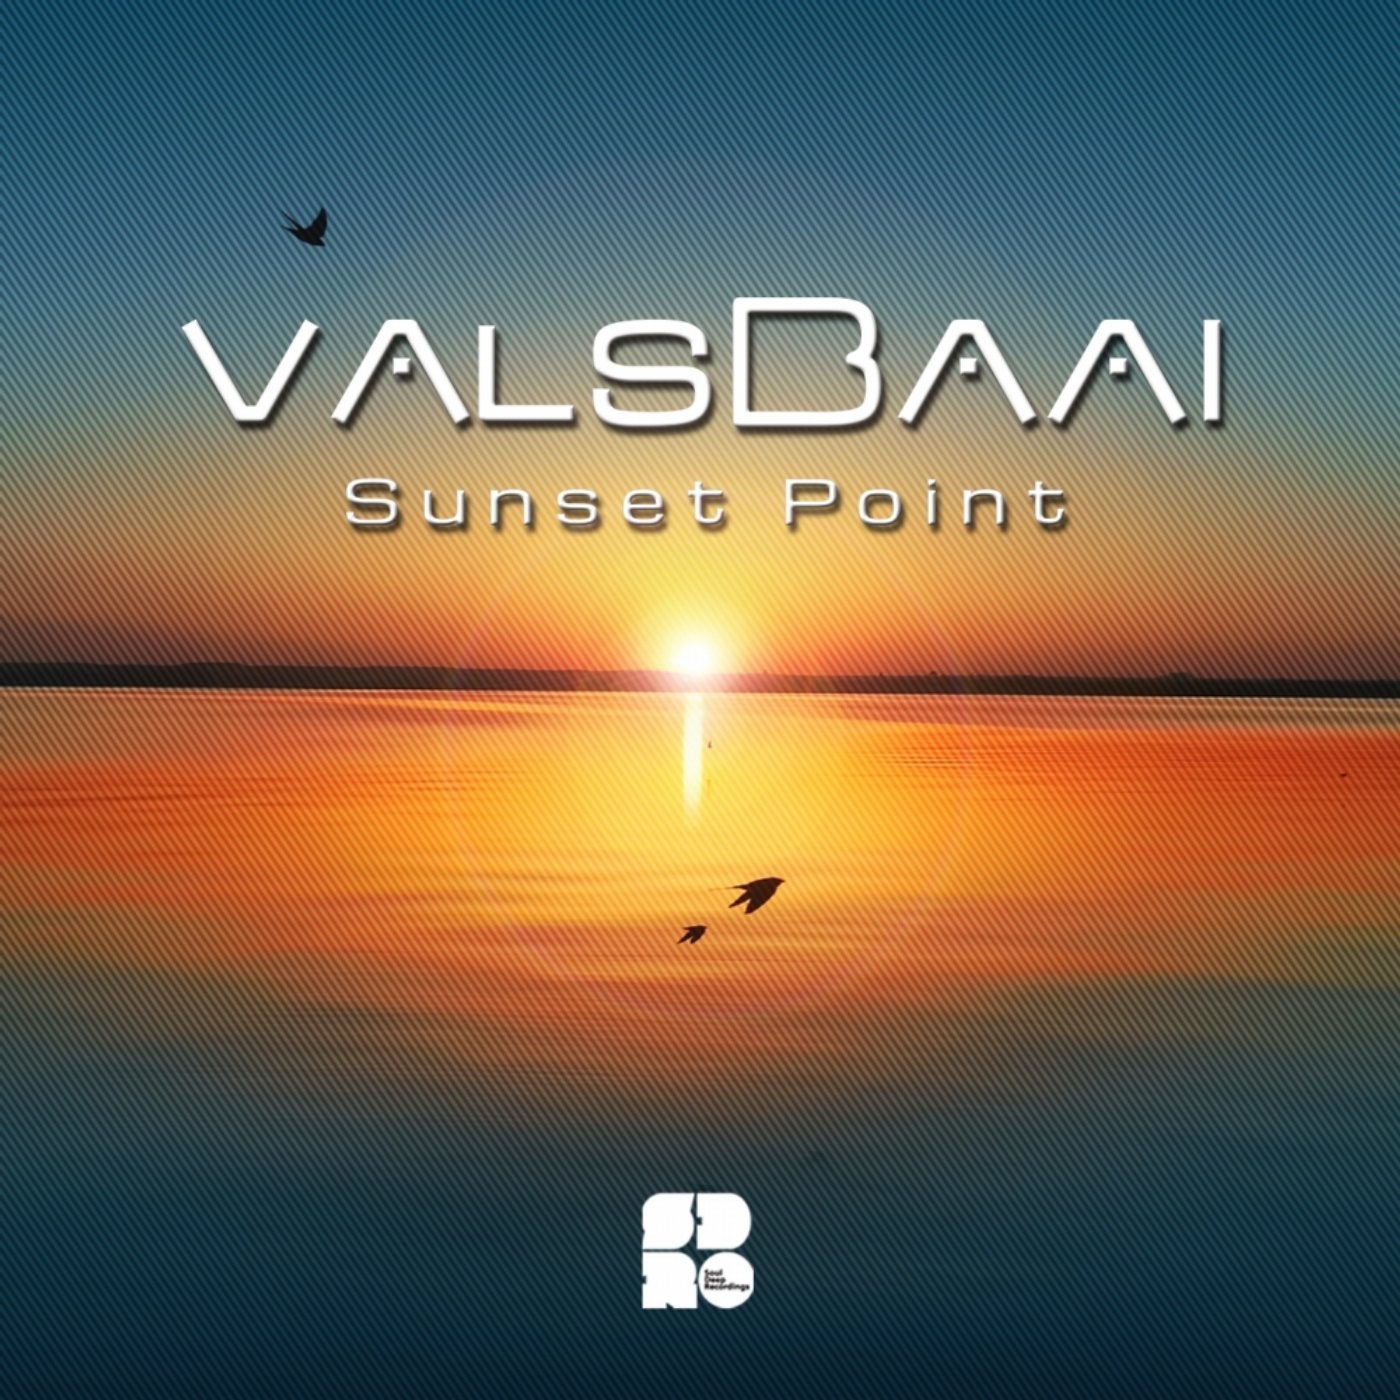 Sunset Point EP